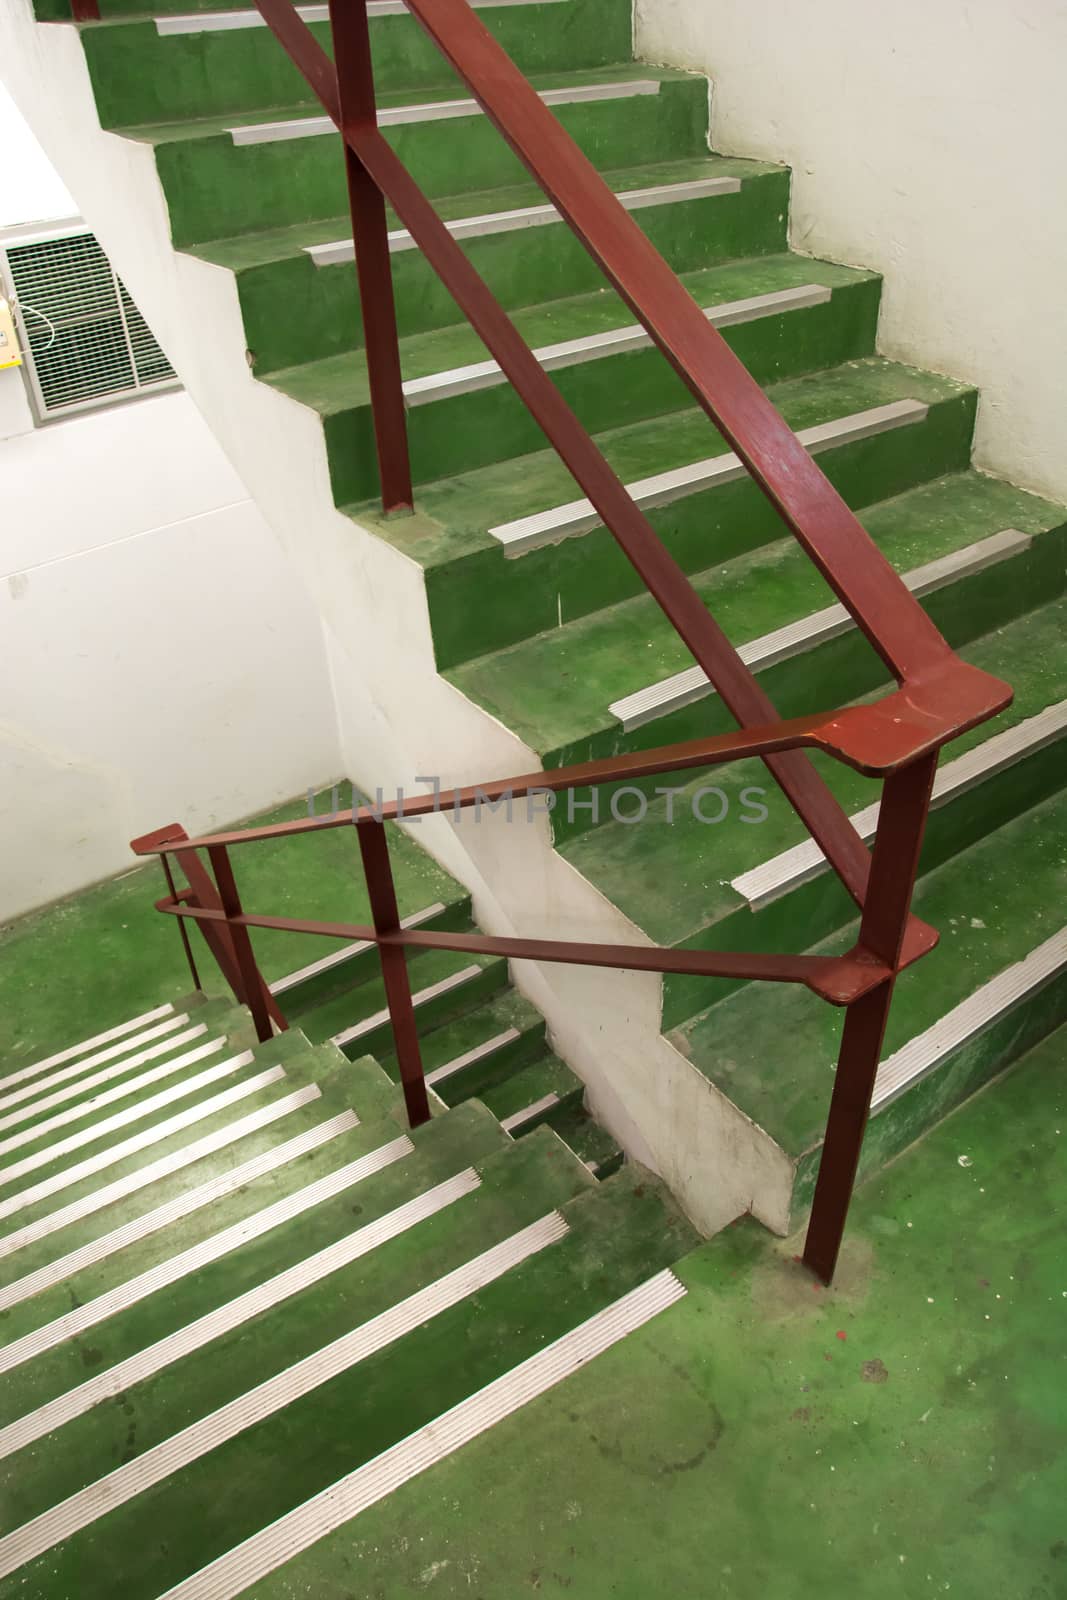 Open green stairwell  by shutterbird